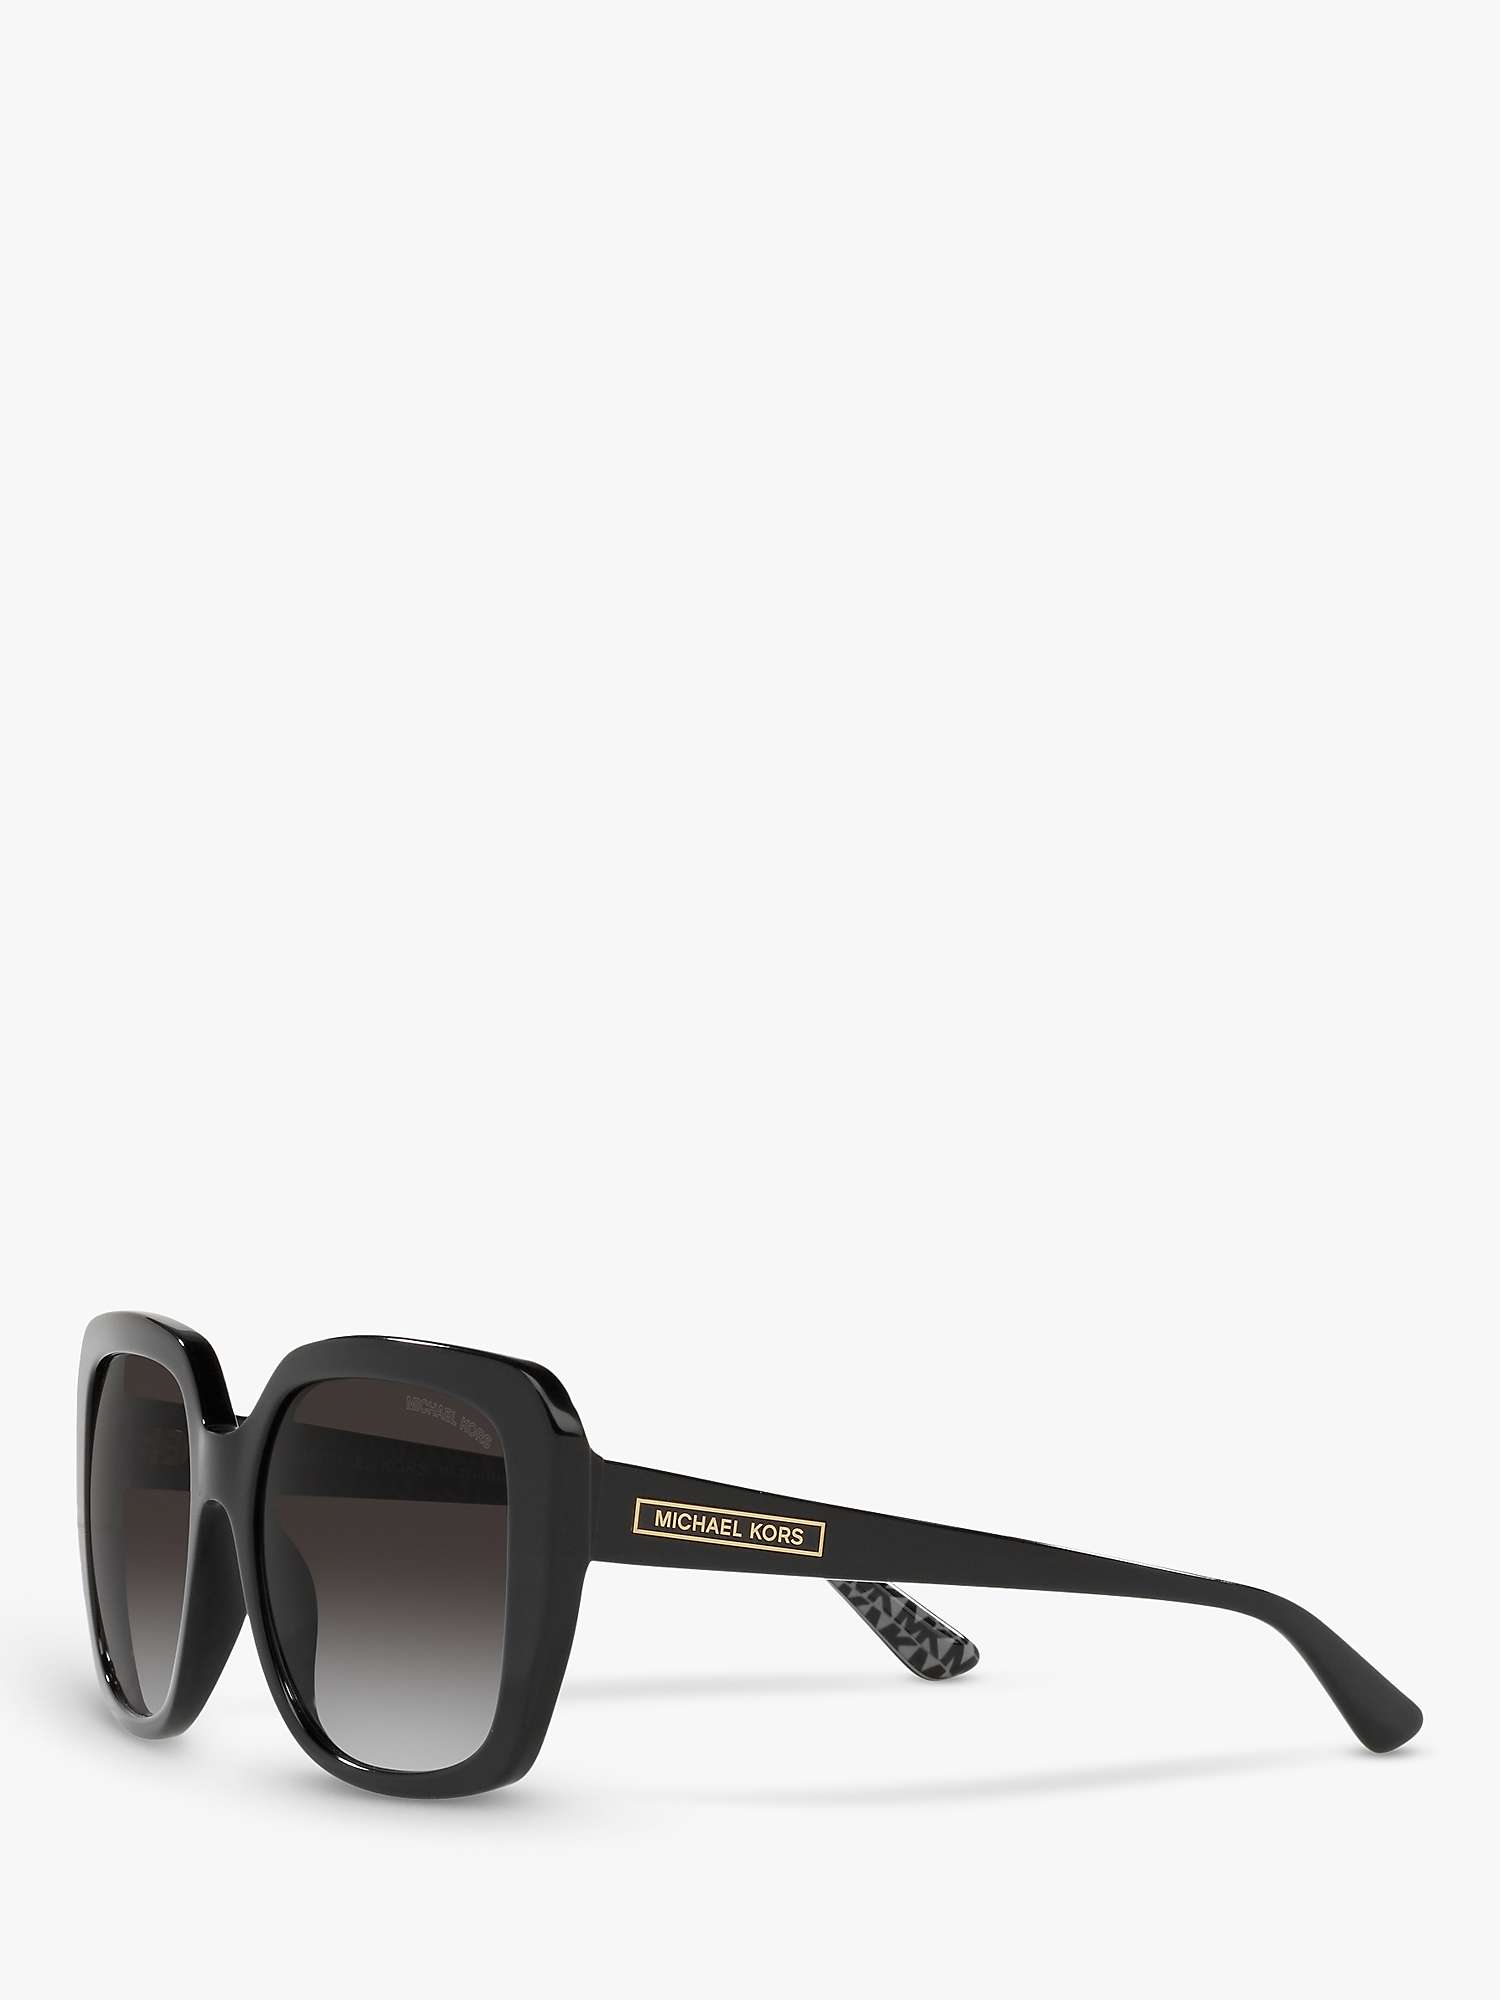 Michael Kors MK2140 Women's Manhasset Square Sunglasses, Black/Grey ...